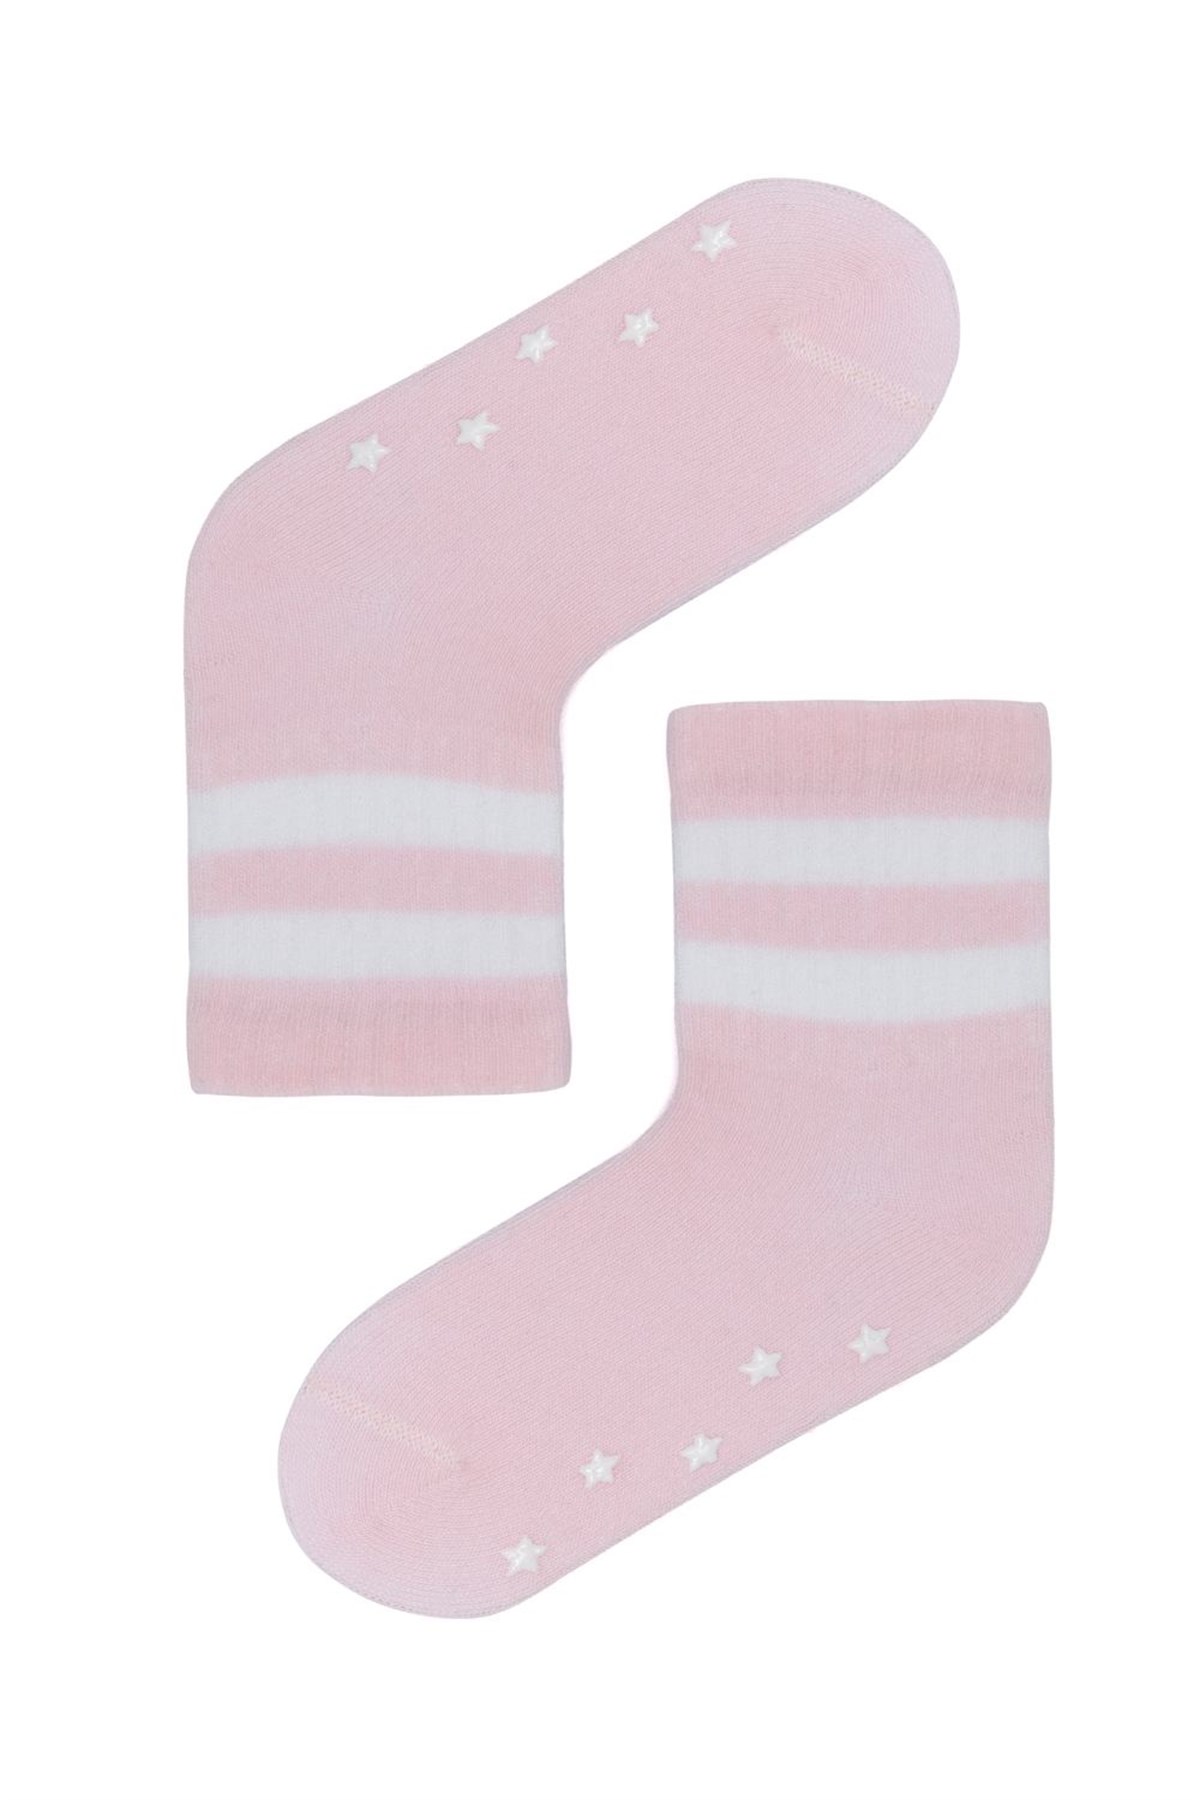 Star Bebek Soket Çorap-Beyaz/Pembe